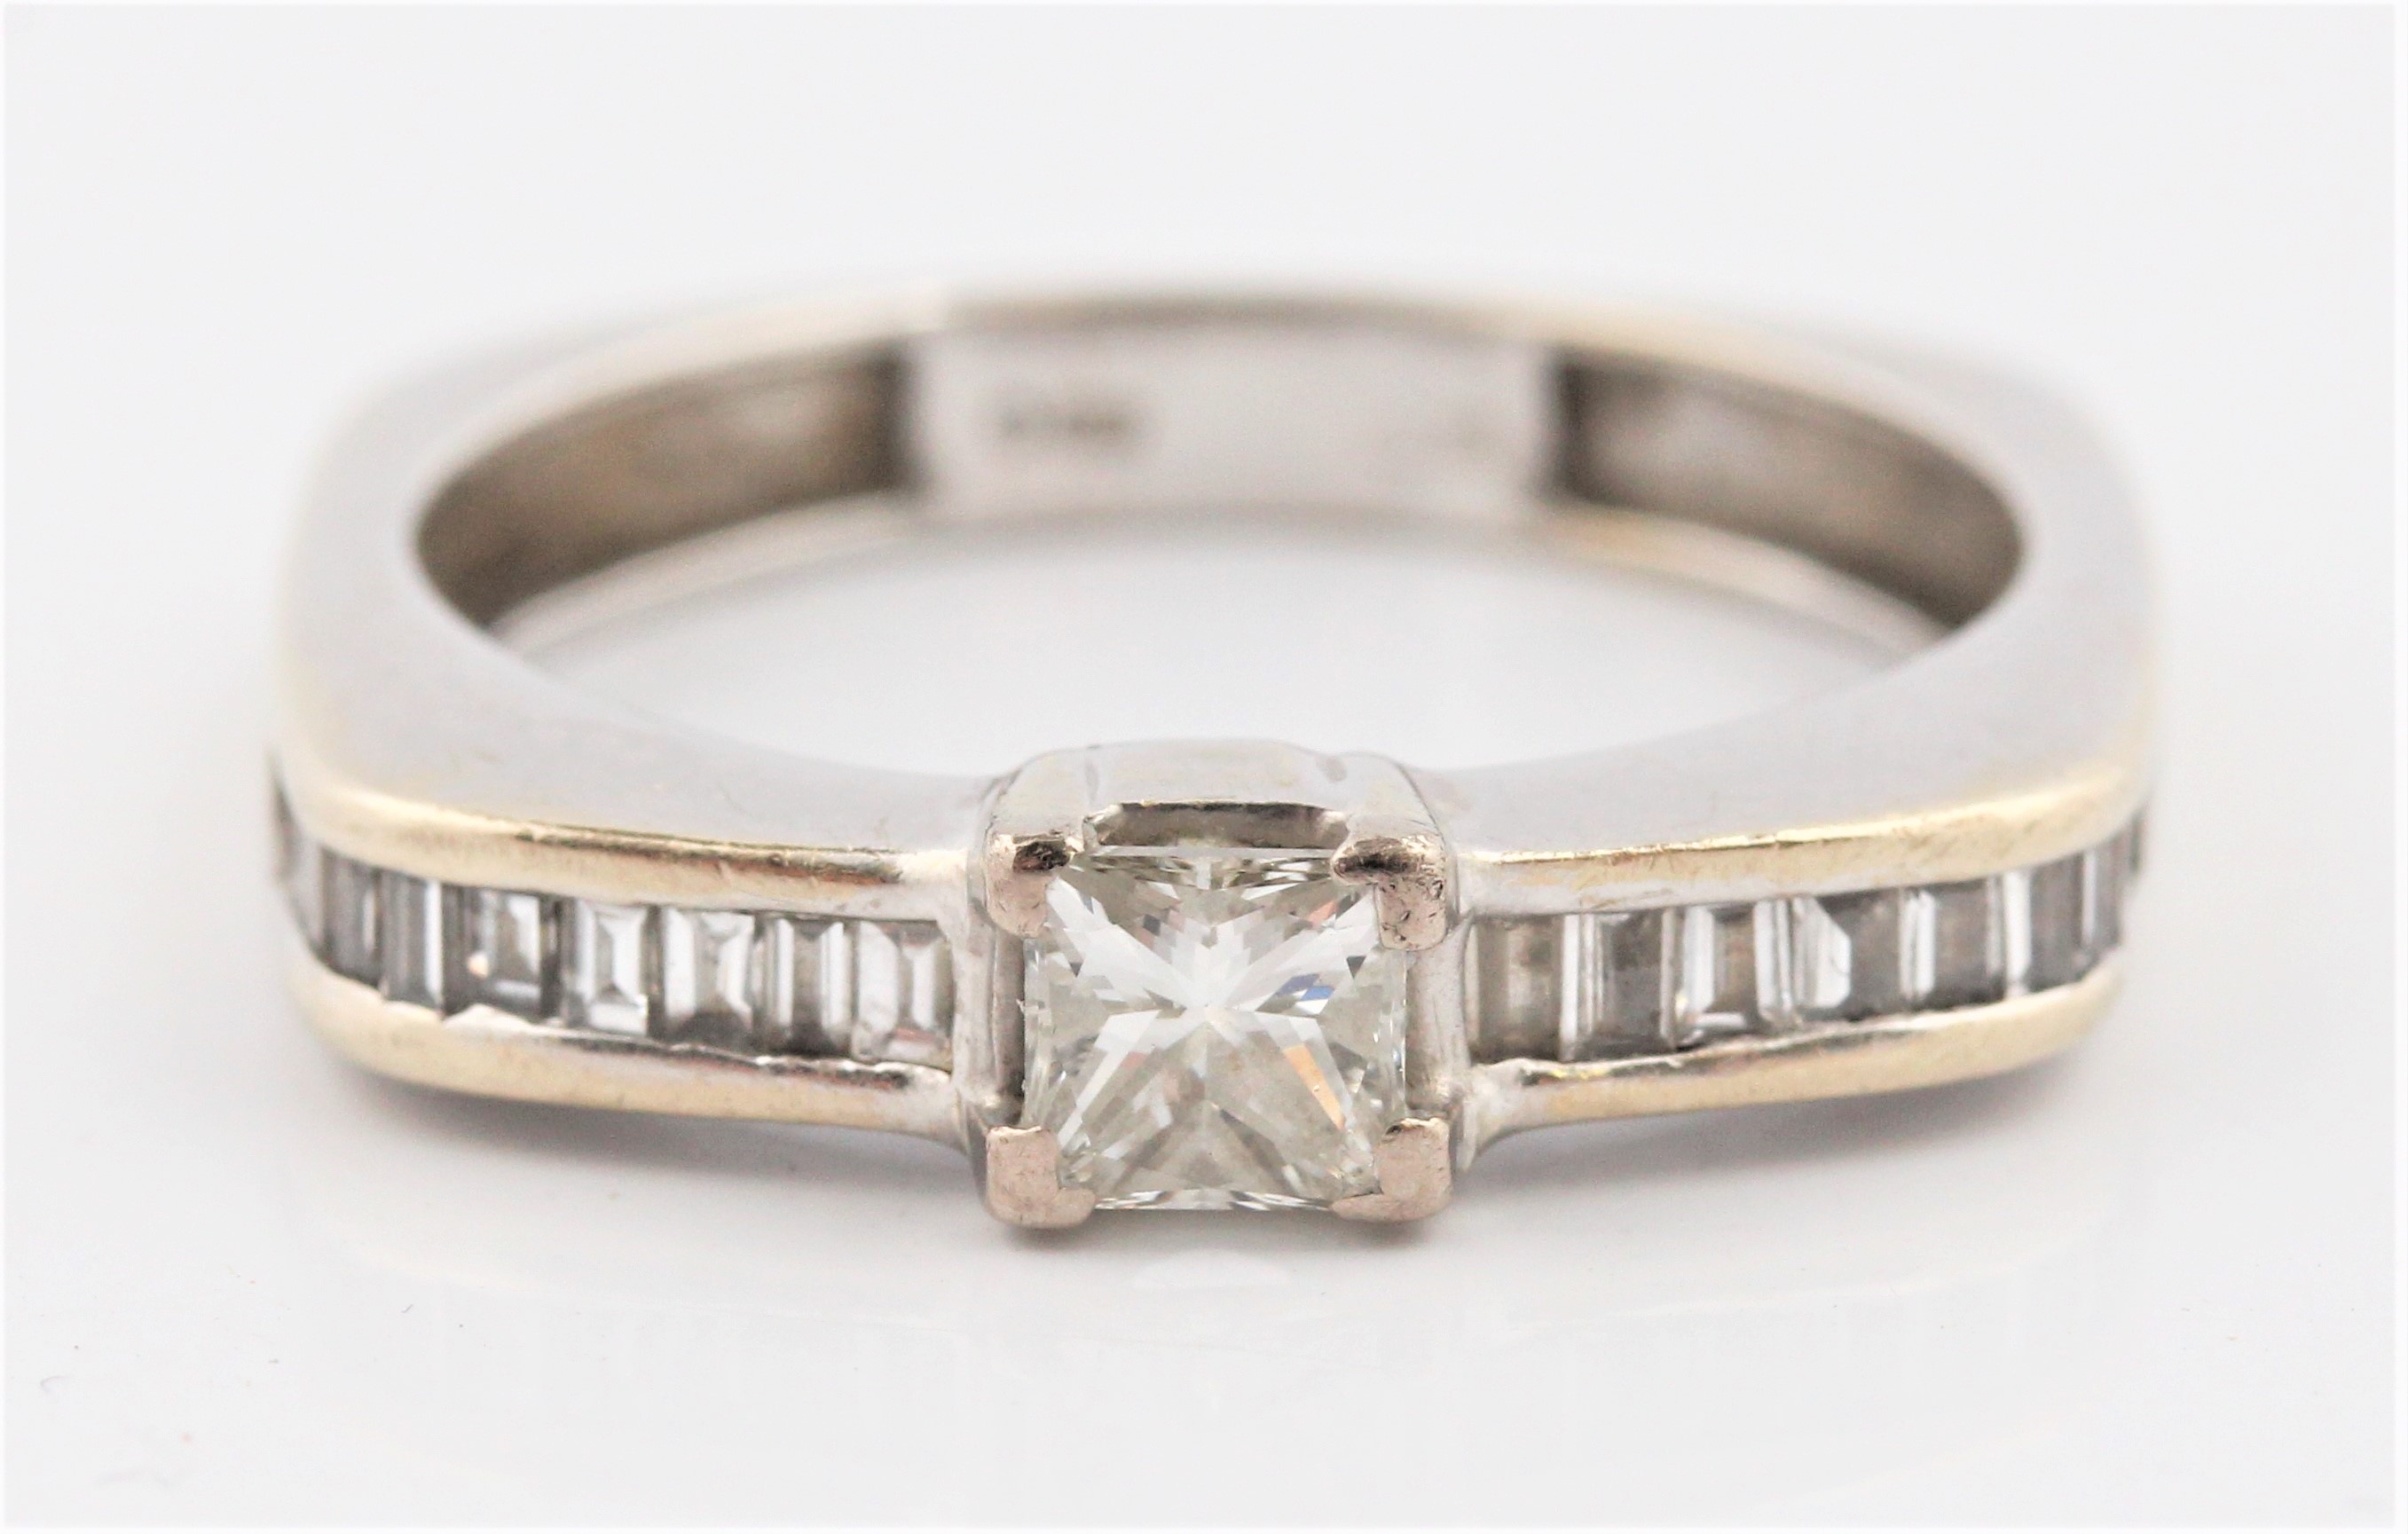 A hallmarked 18ct white gold diamond ring, set with a principal princess cut diamond measuring